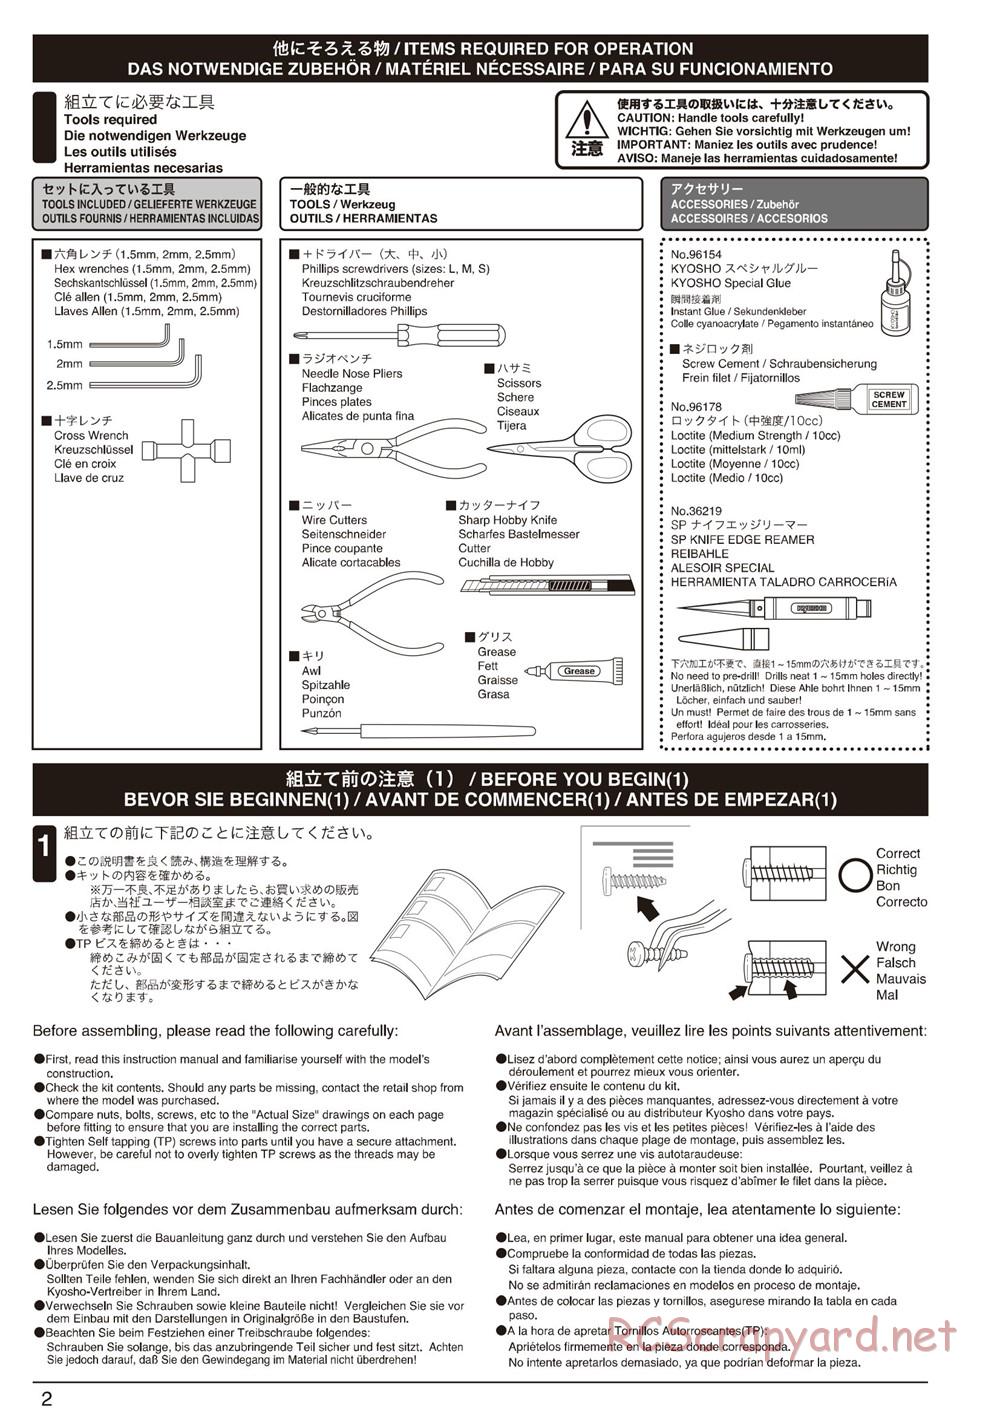 Kyosho - Ultima-SC - Manual - Page 2